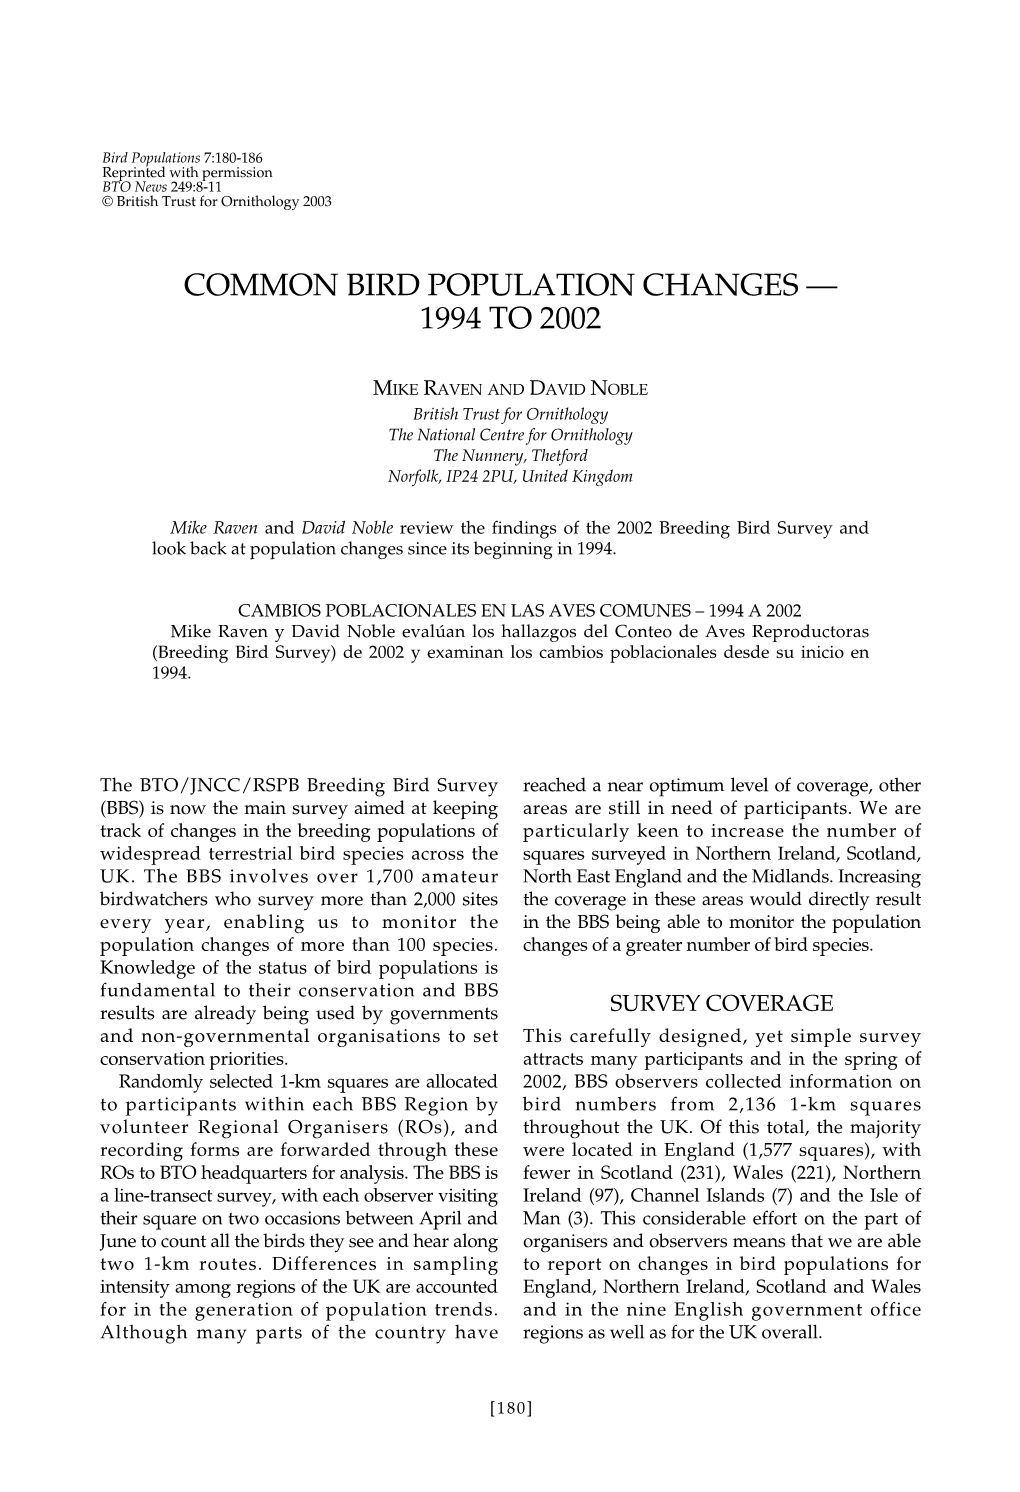 Common Bird Population Changes — 1994 to 2002